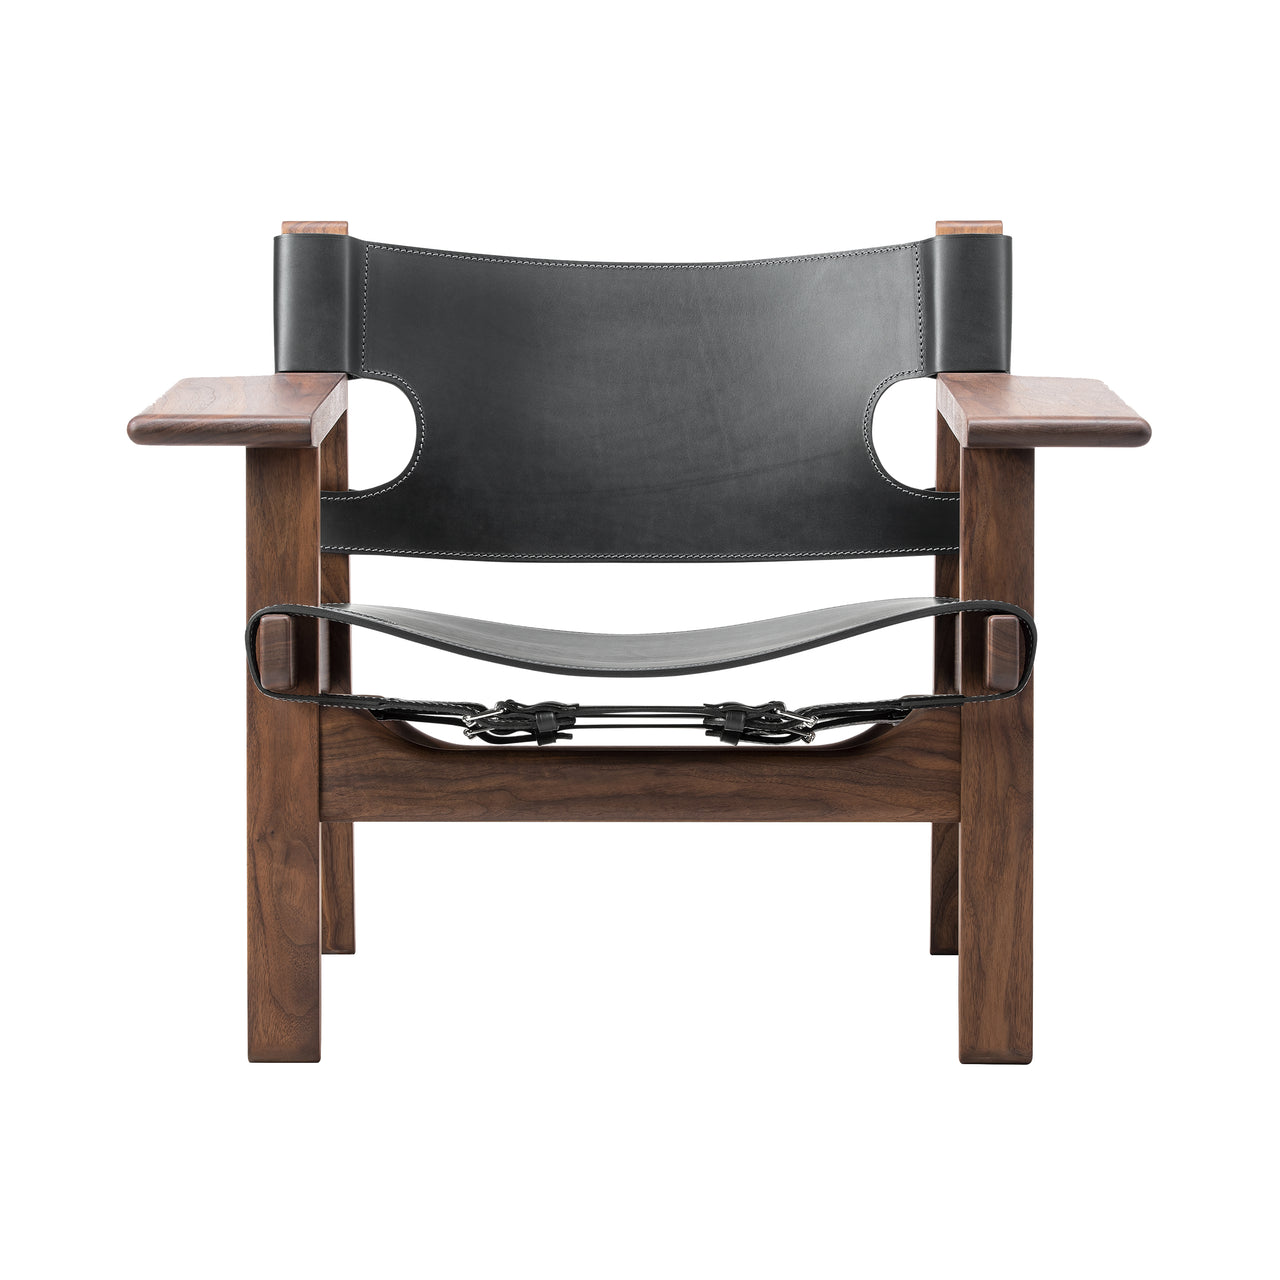 The Spanish Chair: Oiled Walnut + Black